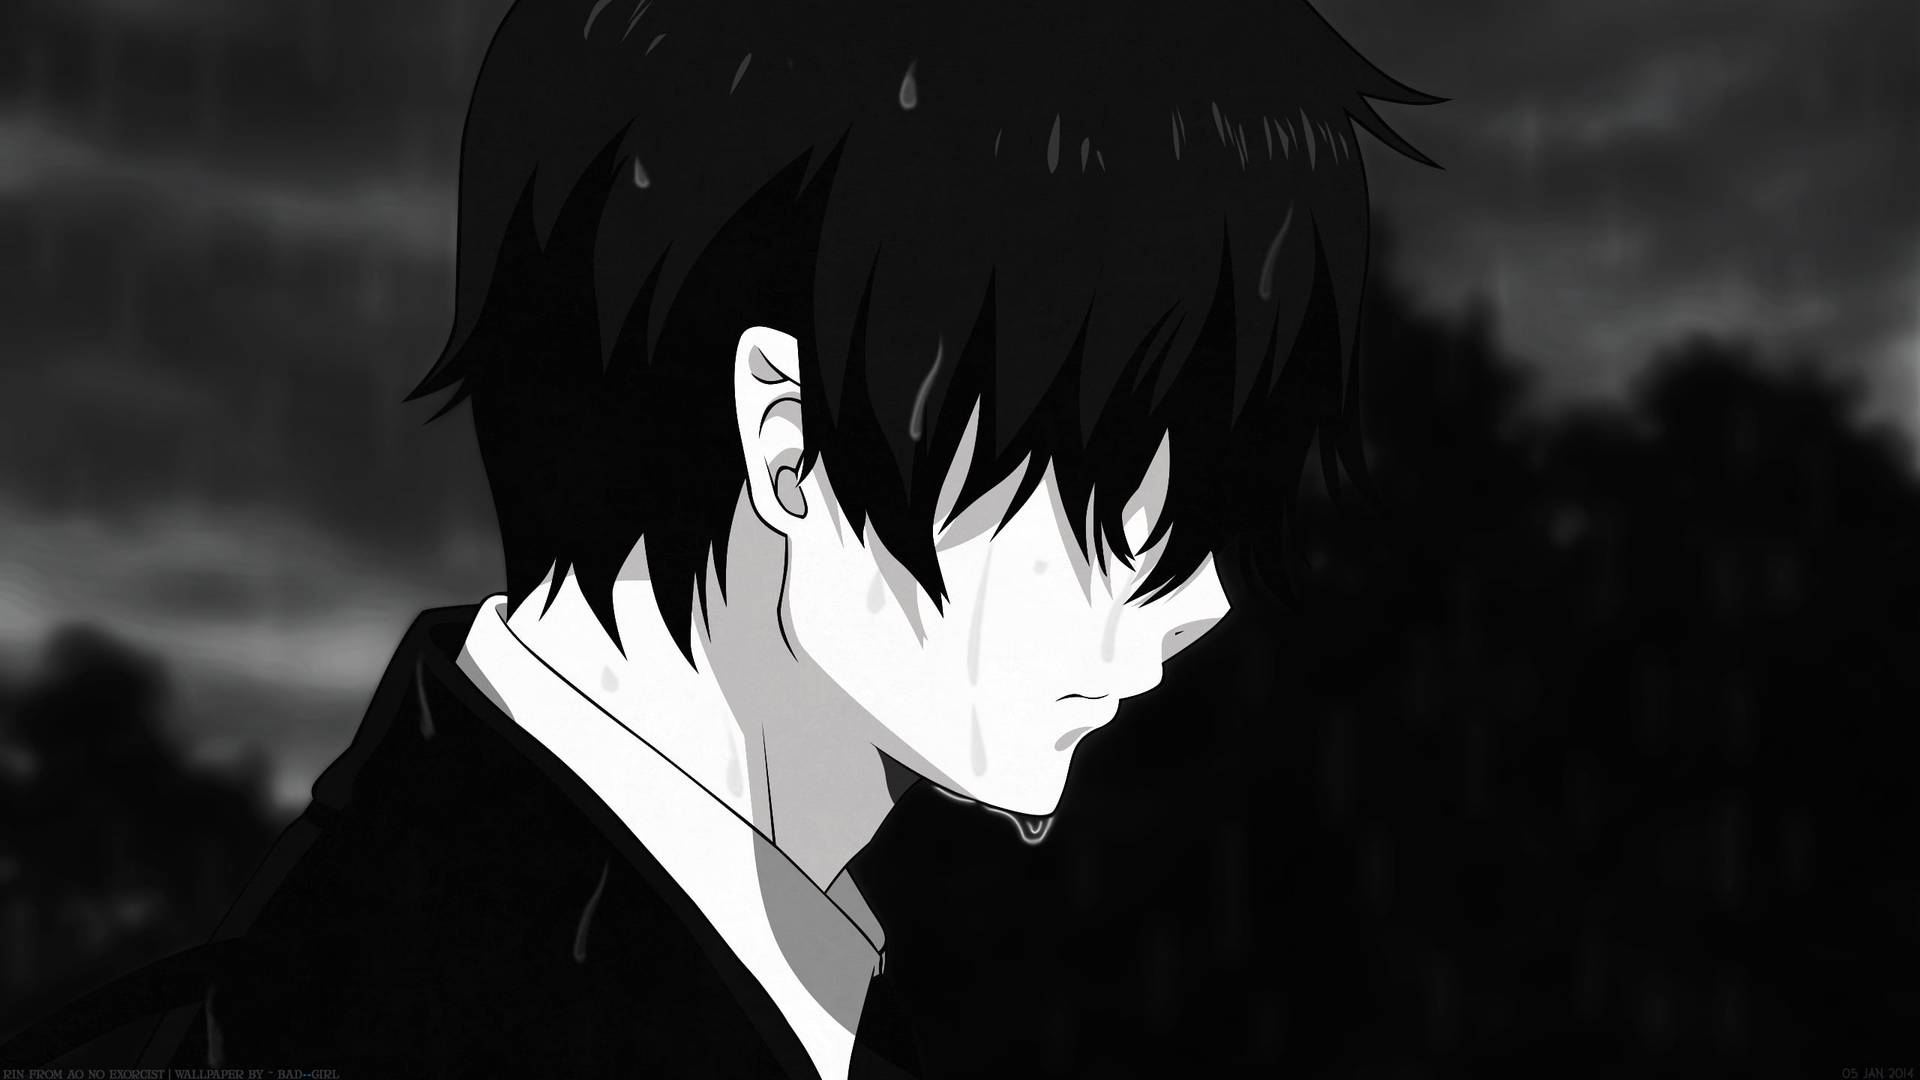 Black And White Melancholy Anime Boy Wallpaper